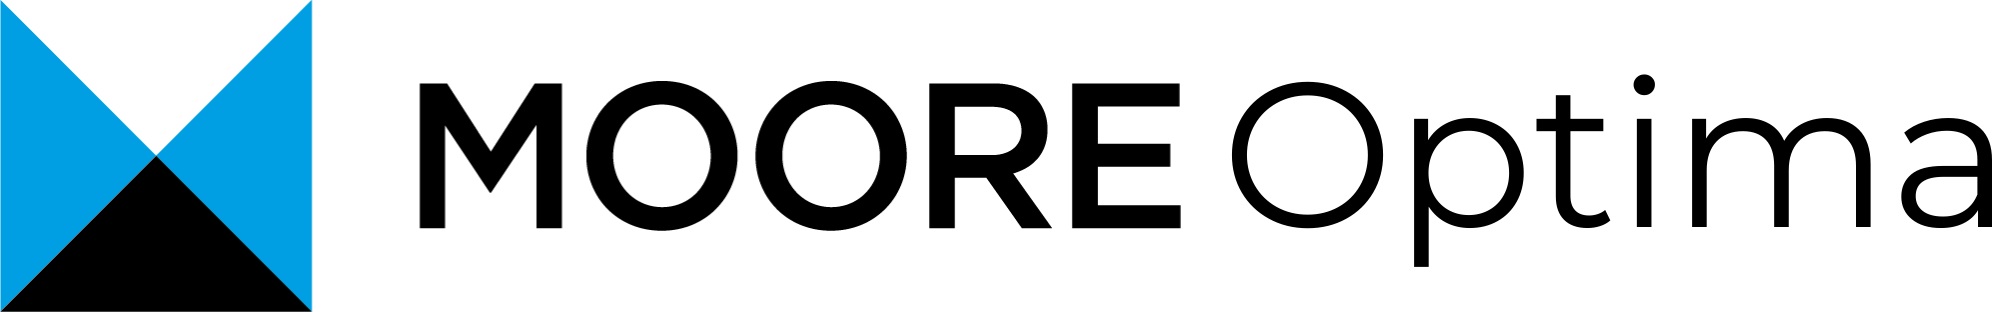 Moore Optima logo